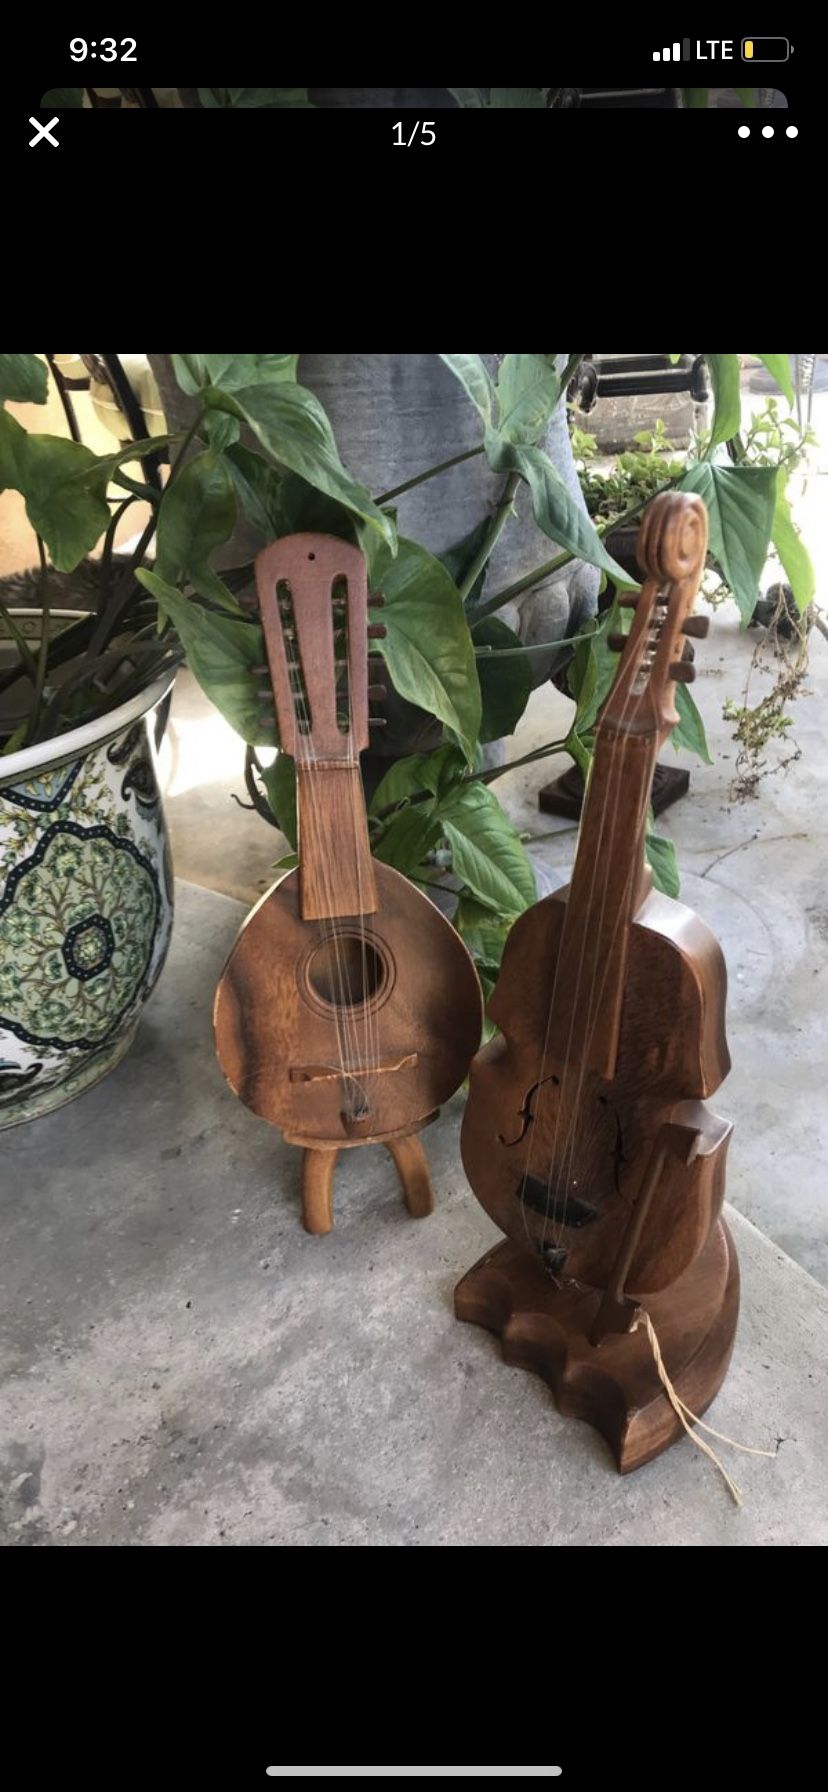 Wooden instruments - violin and guitar decor